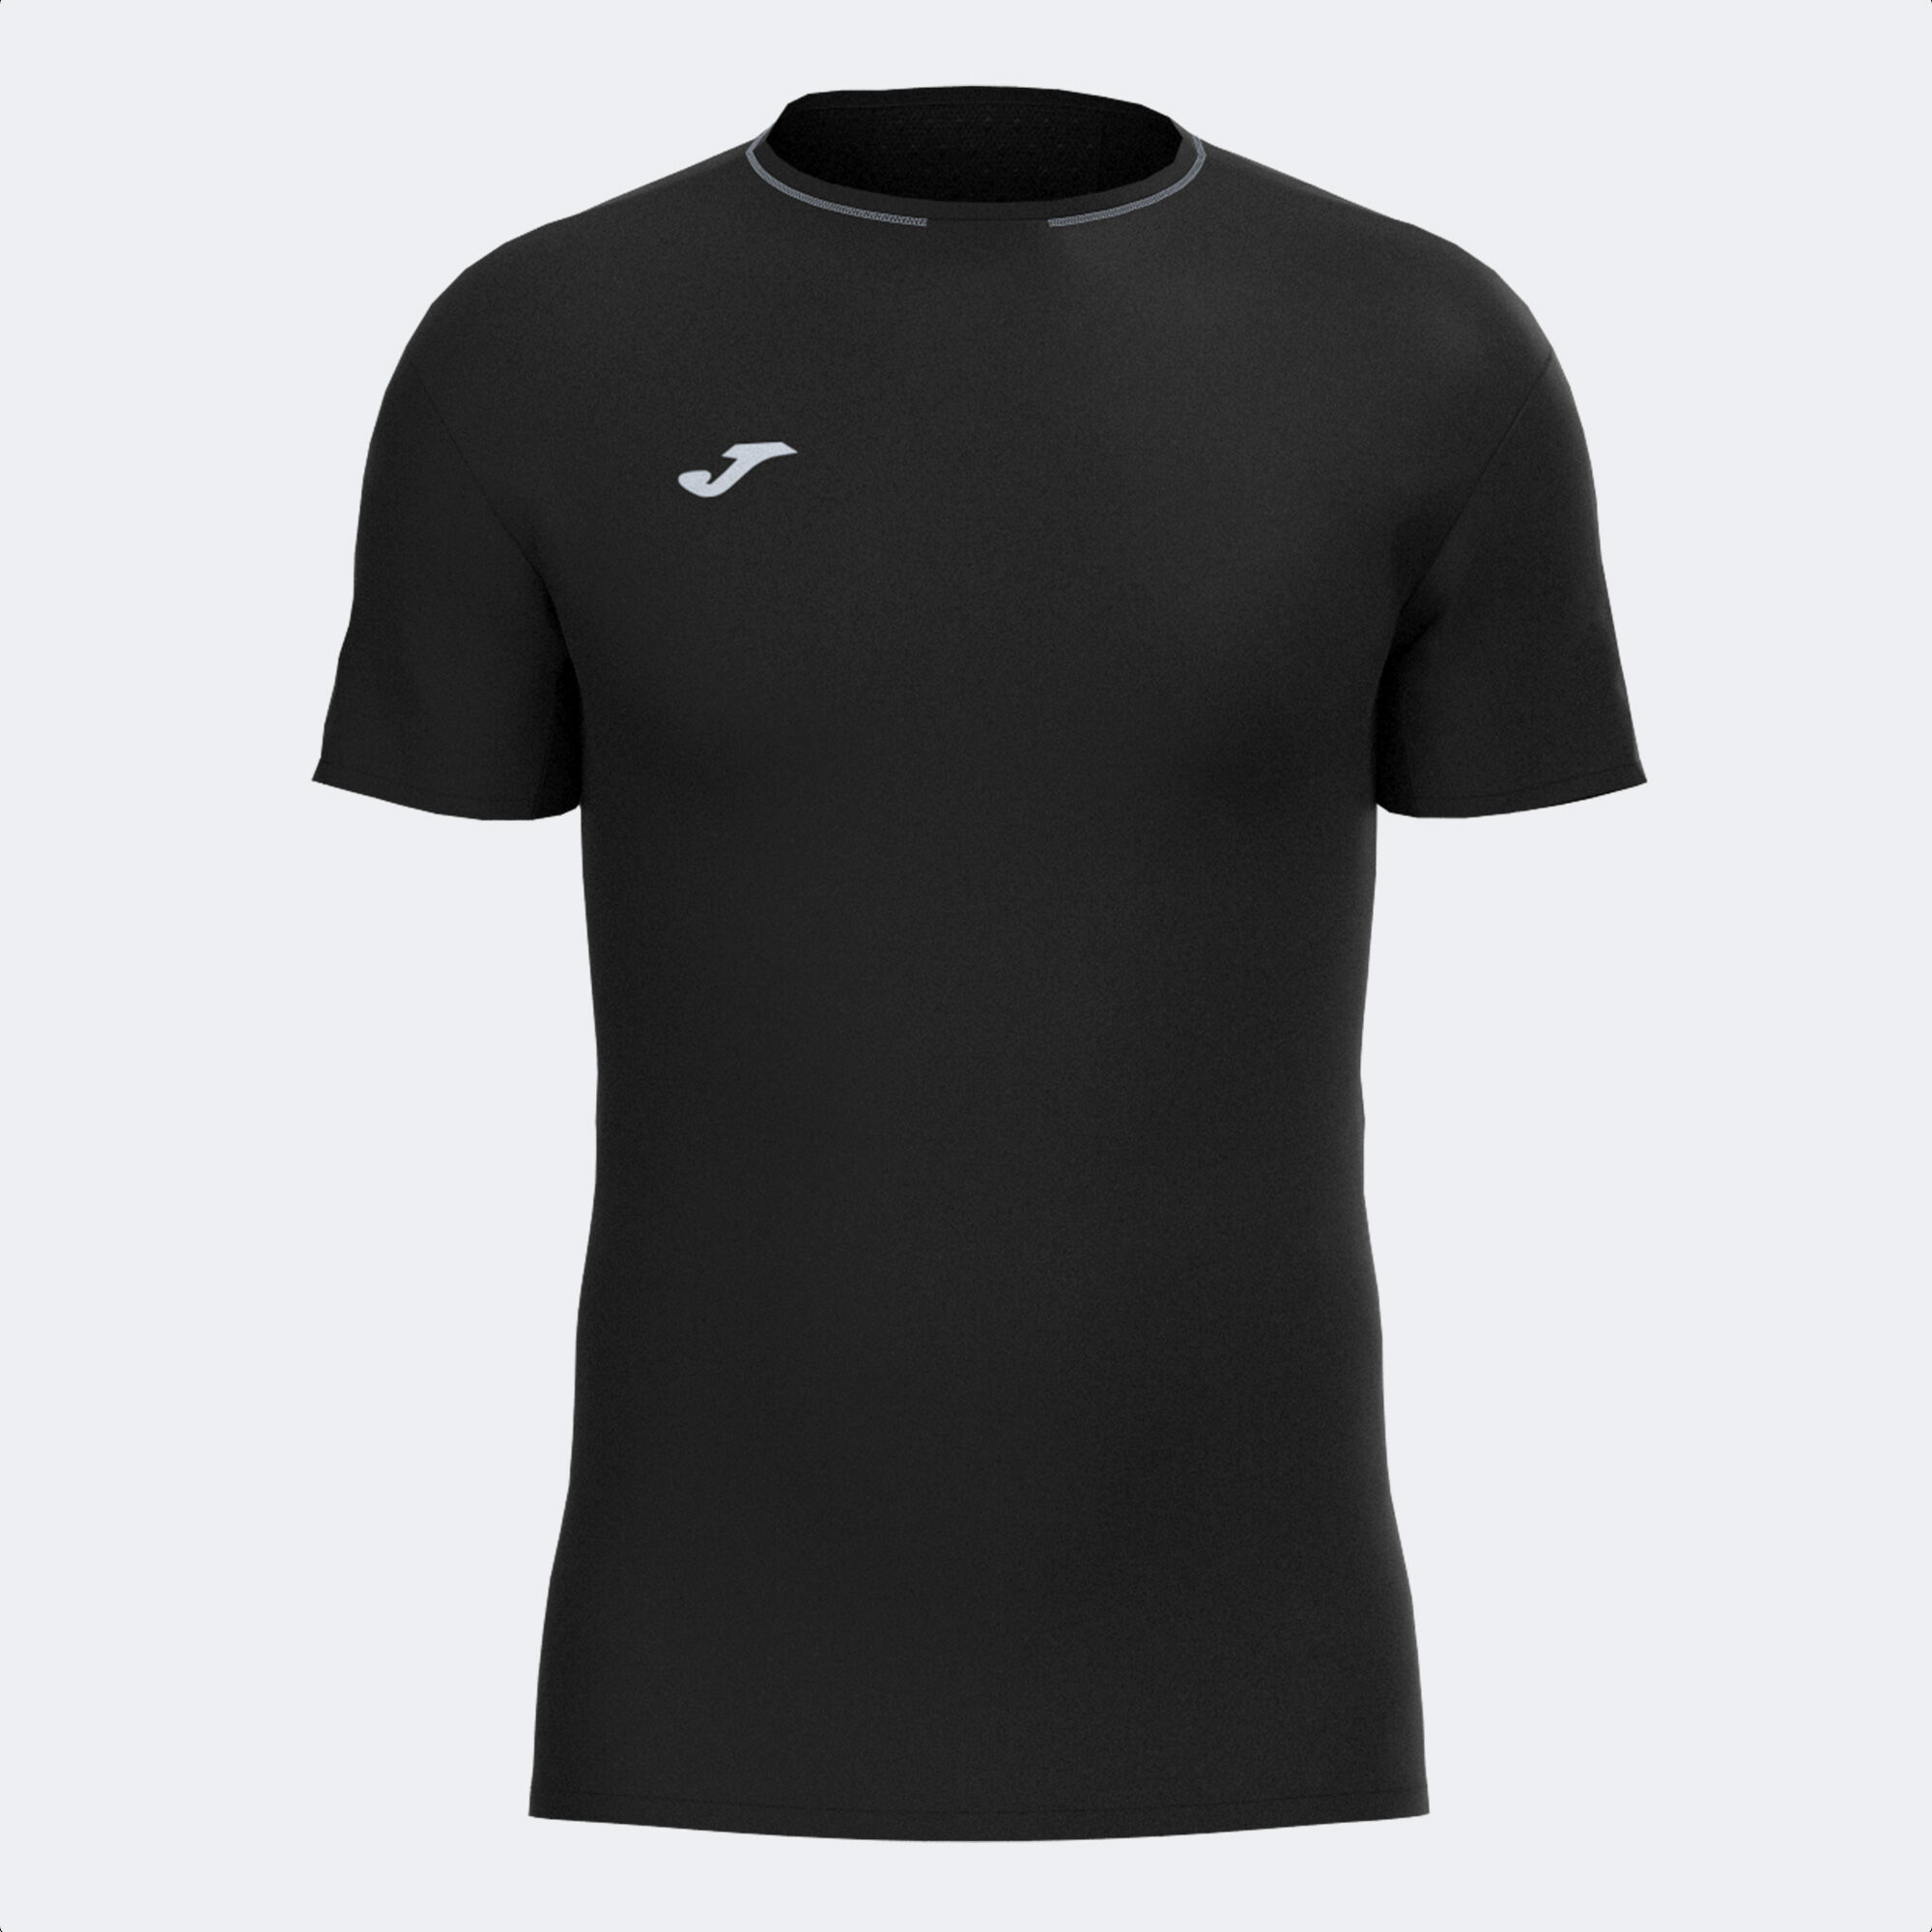 Nike Lightweight Running Sleeves (S/M,White/Silver), White